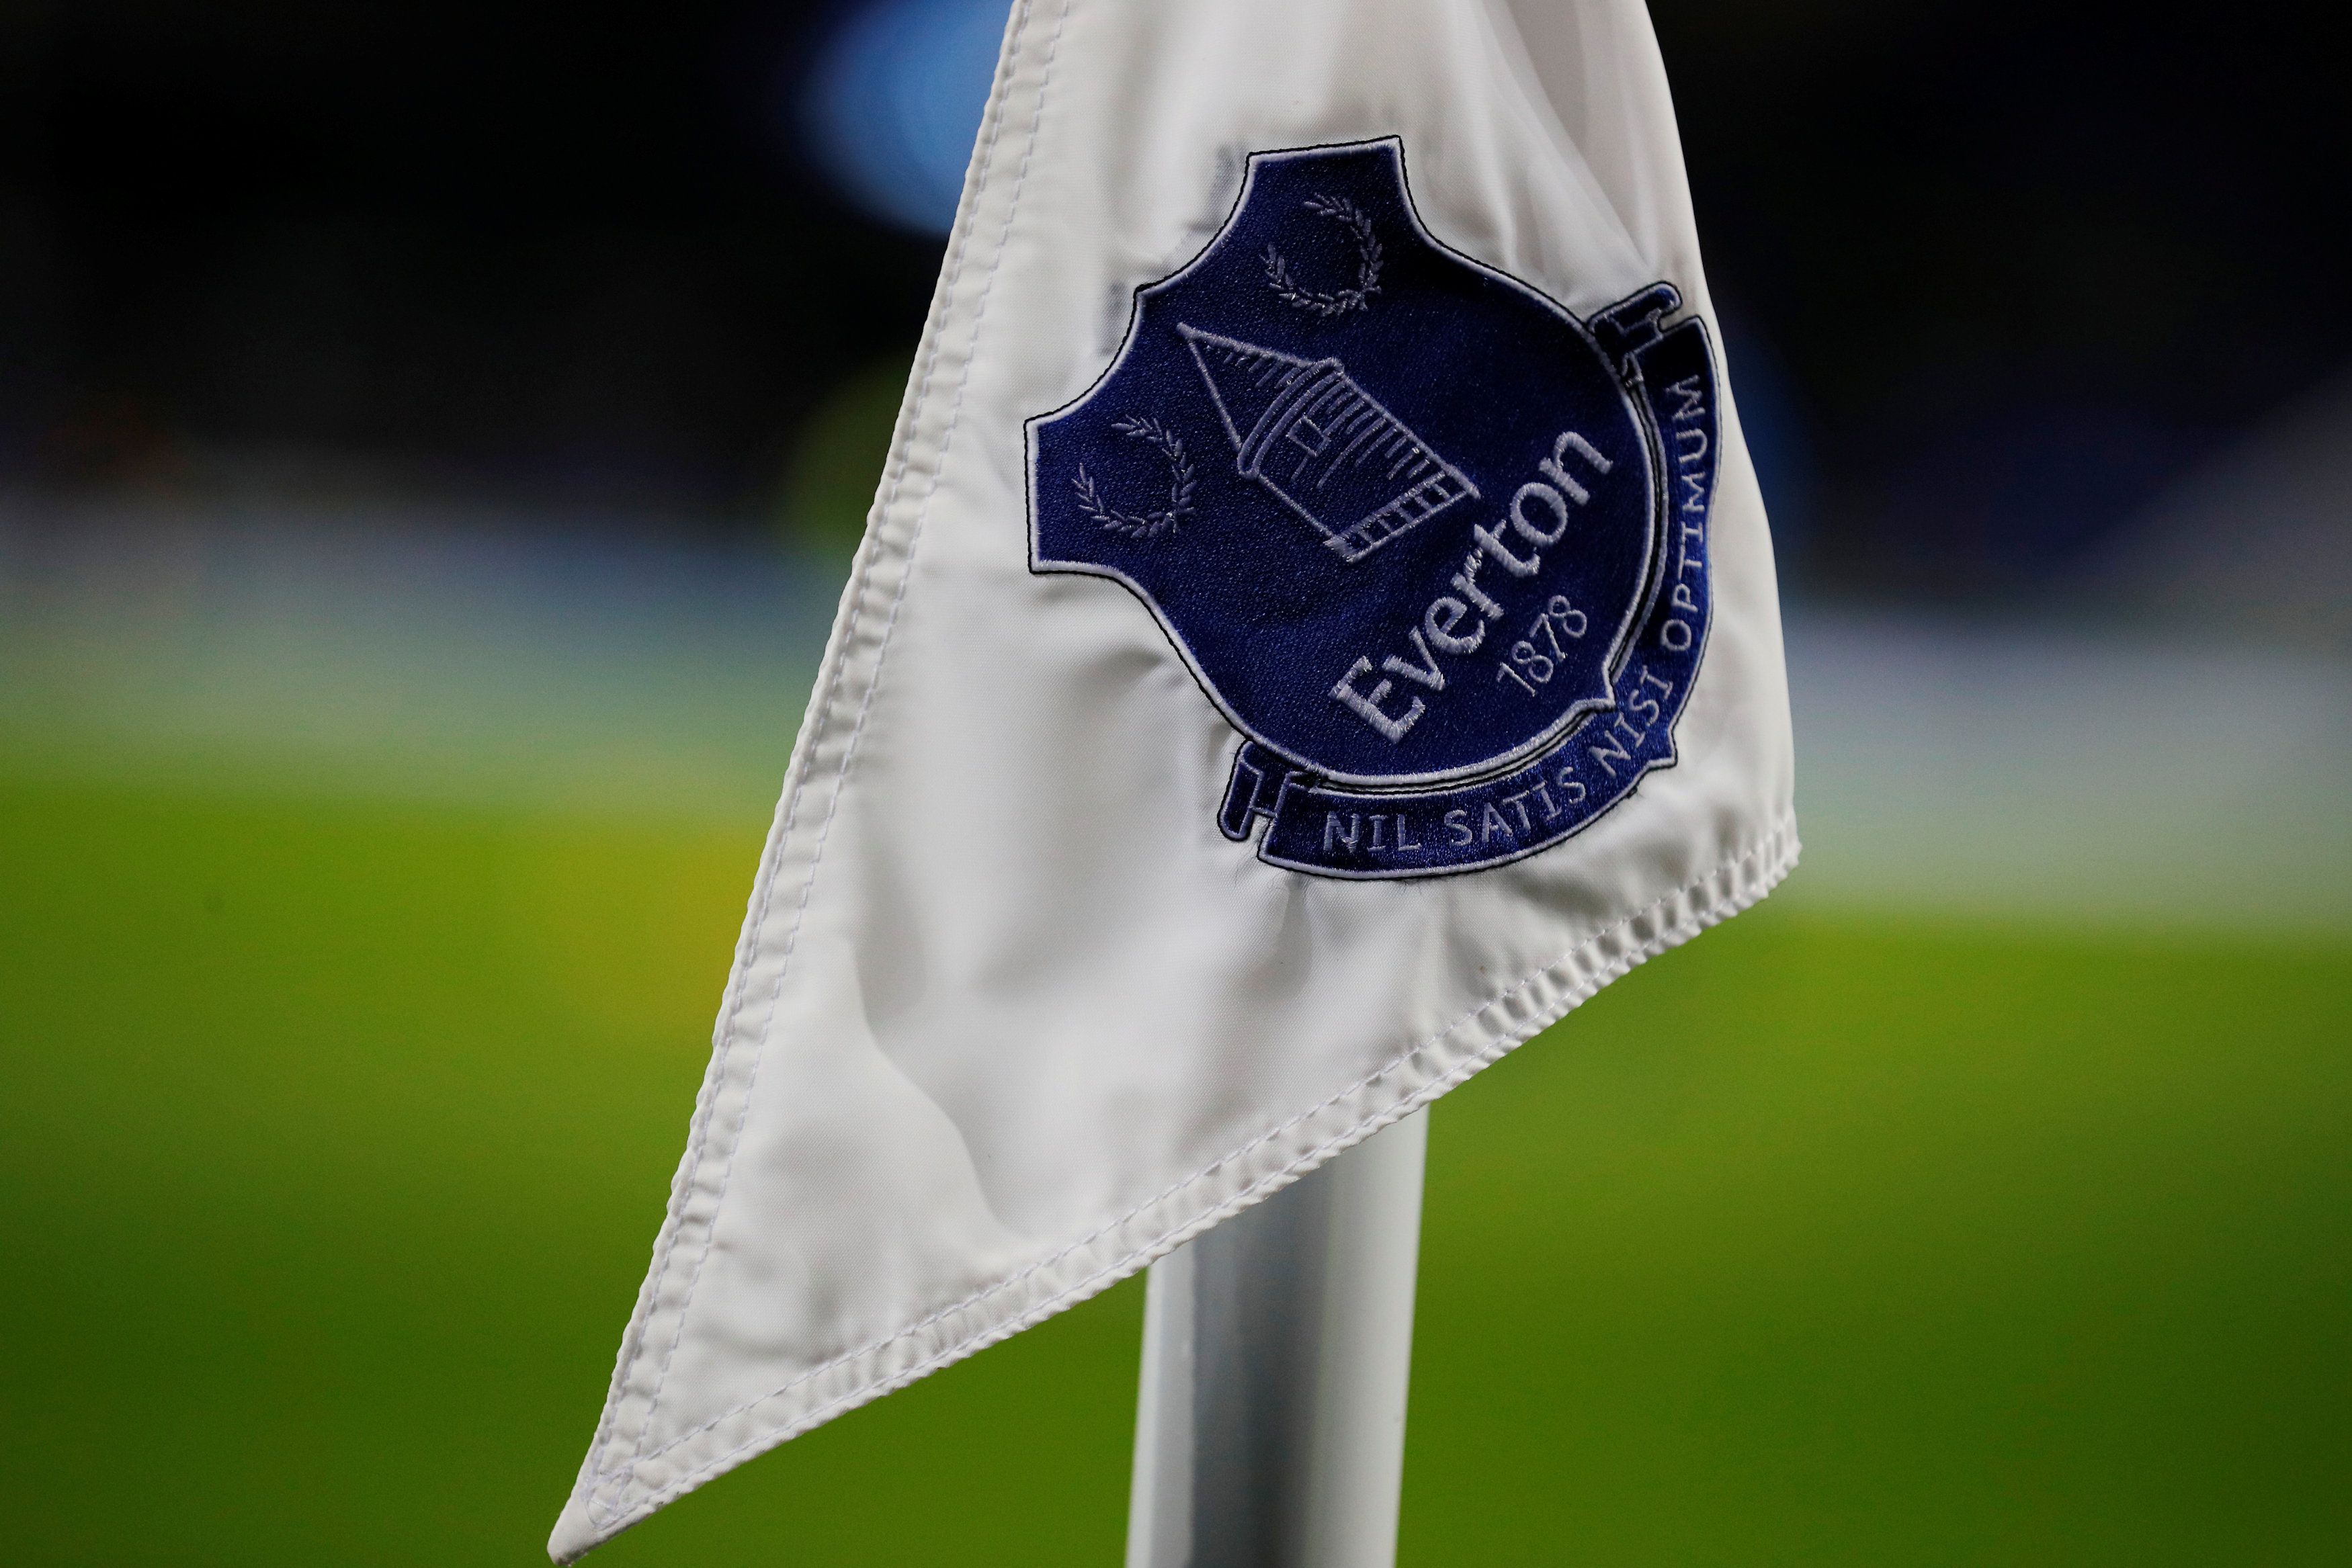 Everton's badge on a corner flag.